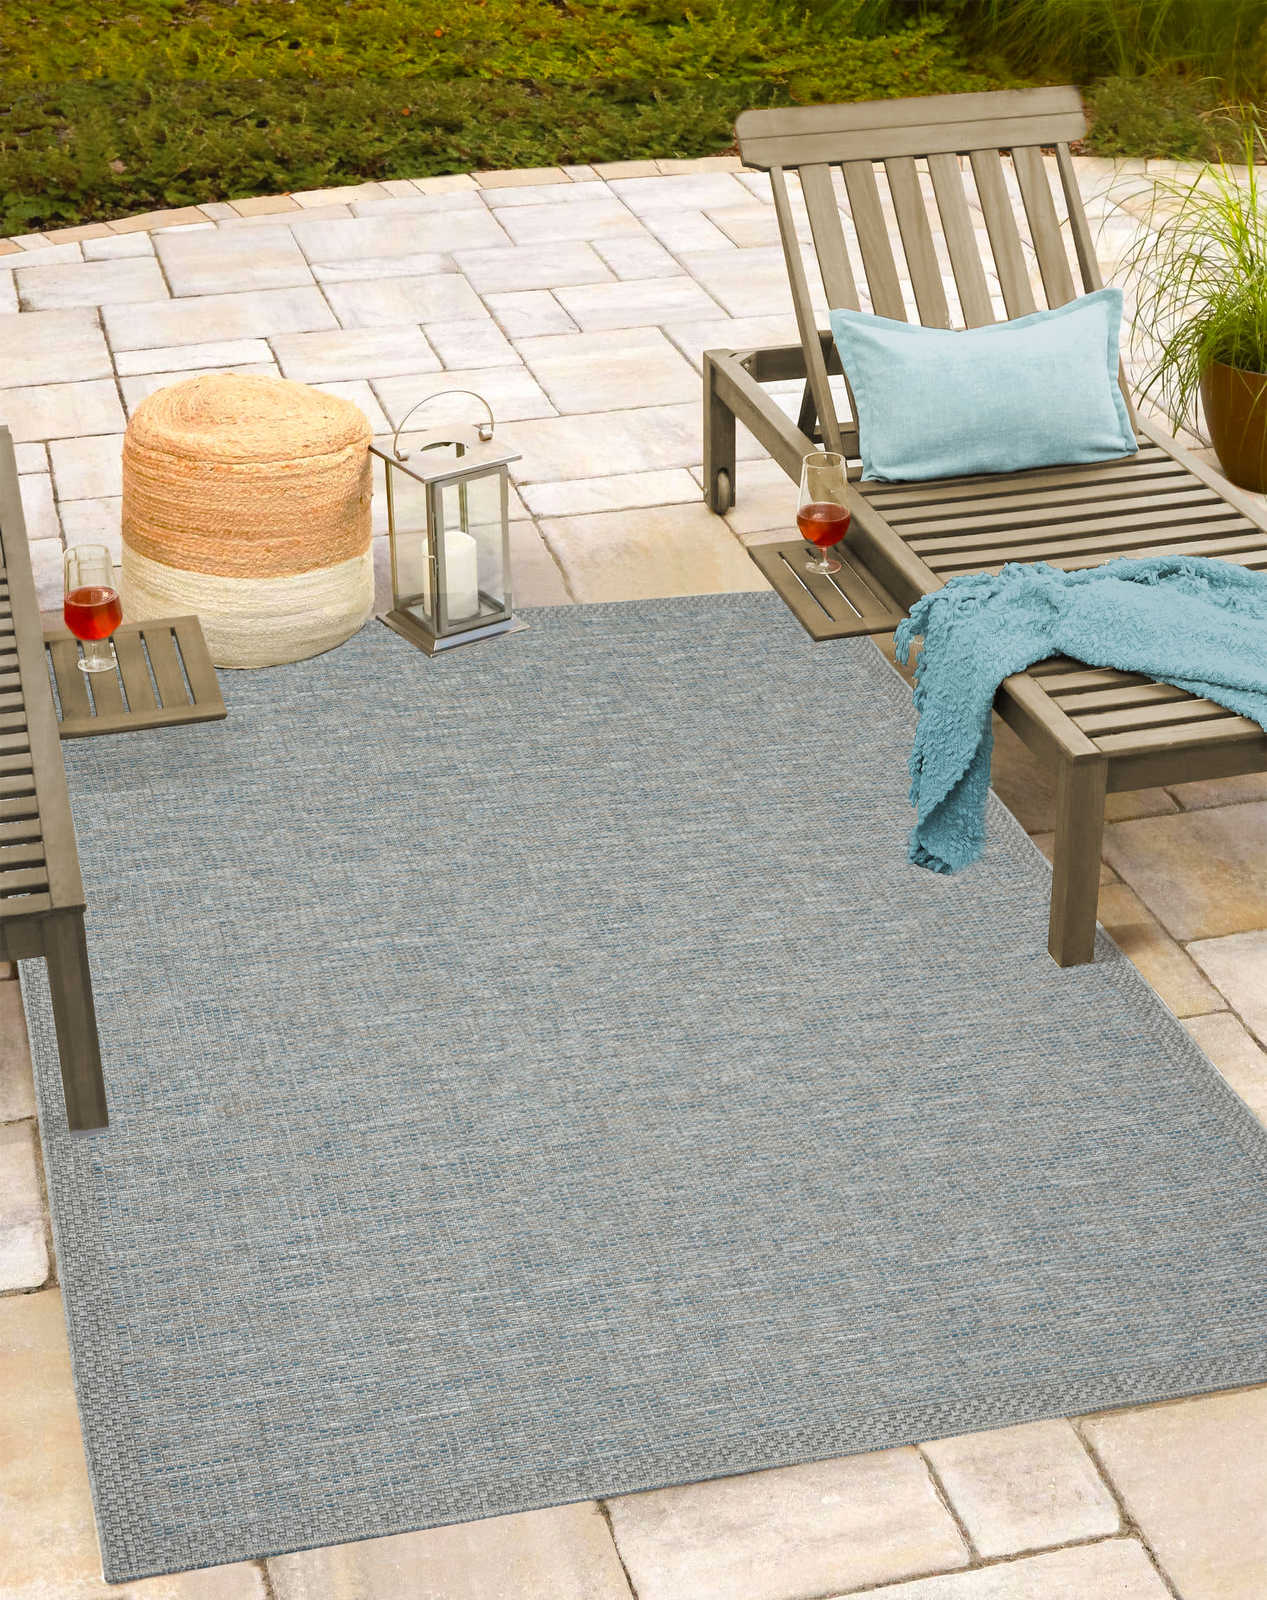 Plain Outdoor Carpet in Turquoise as Runner - 180 x 67 cm
